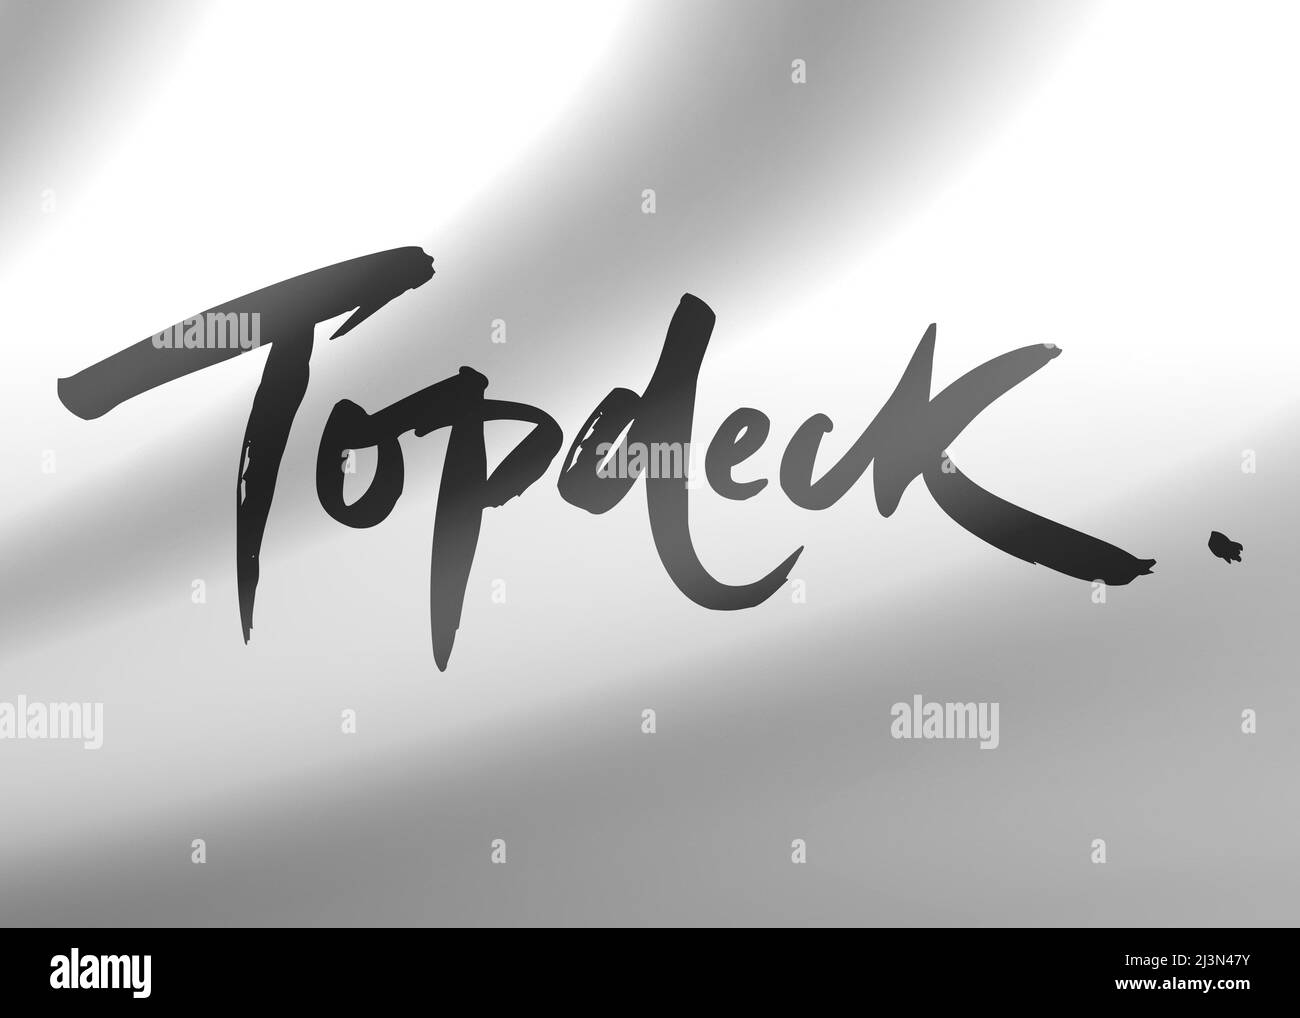 Topdeck logo Stock Photo